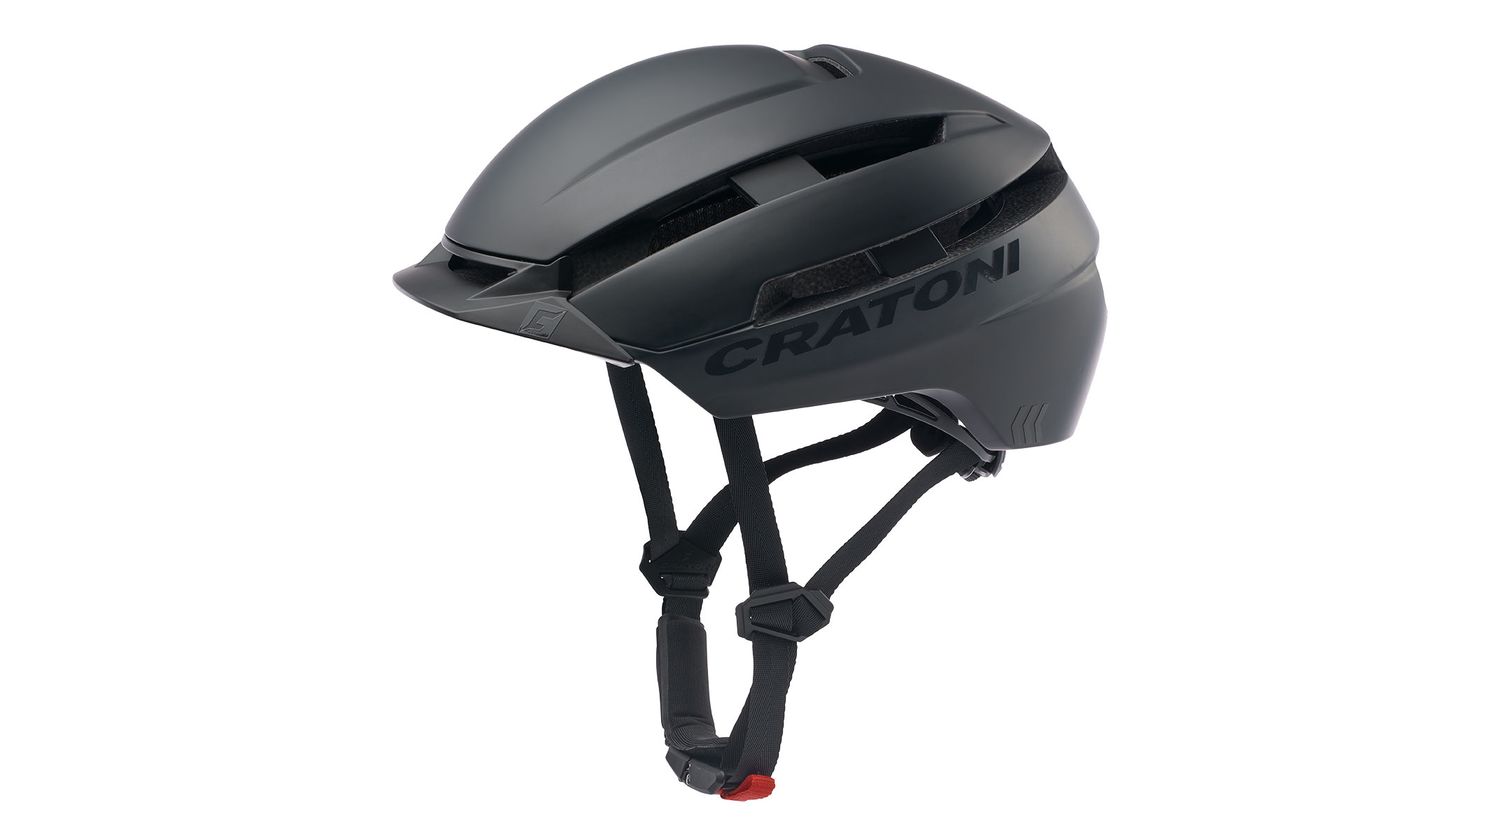 Cratoni C-Loom 2.0 Helm black matt